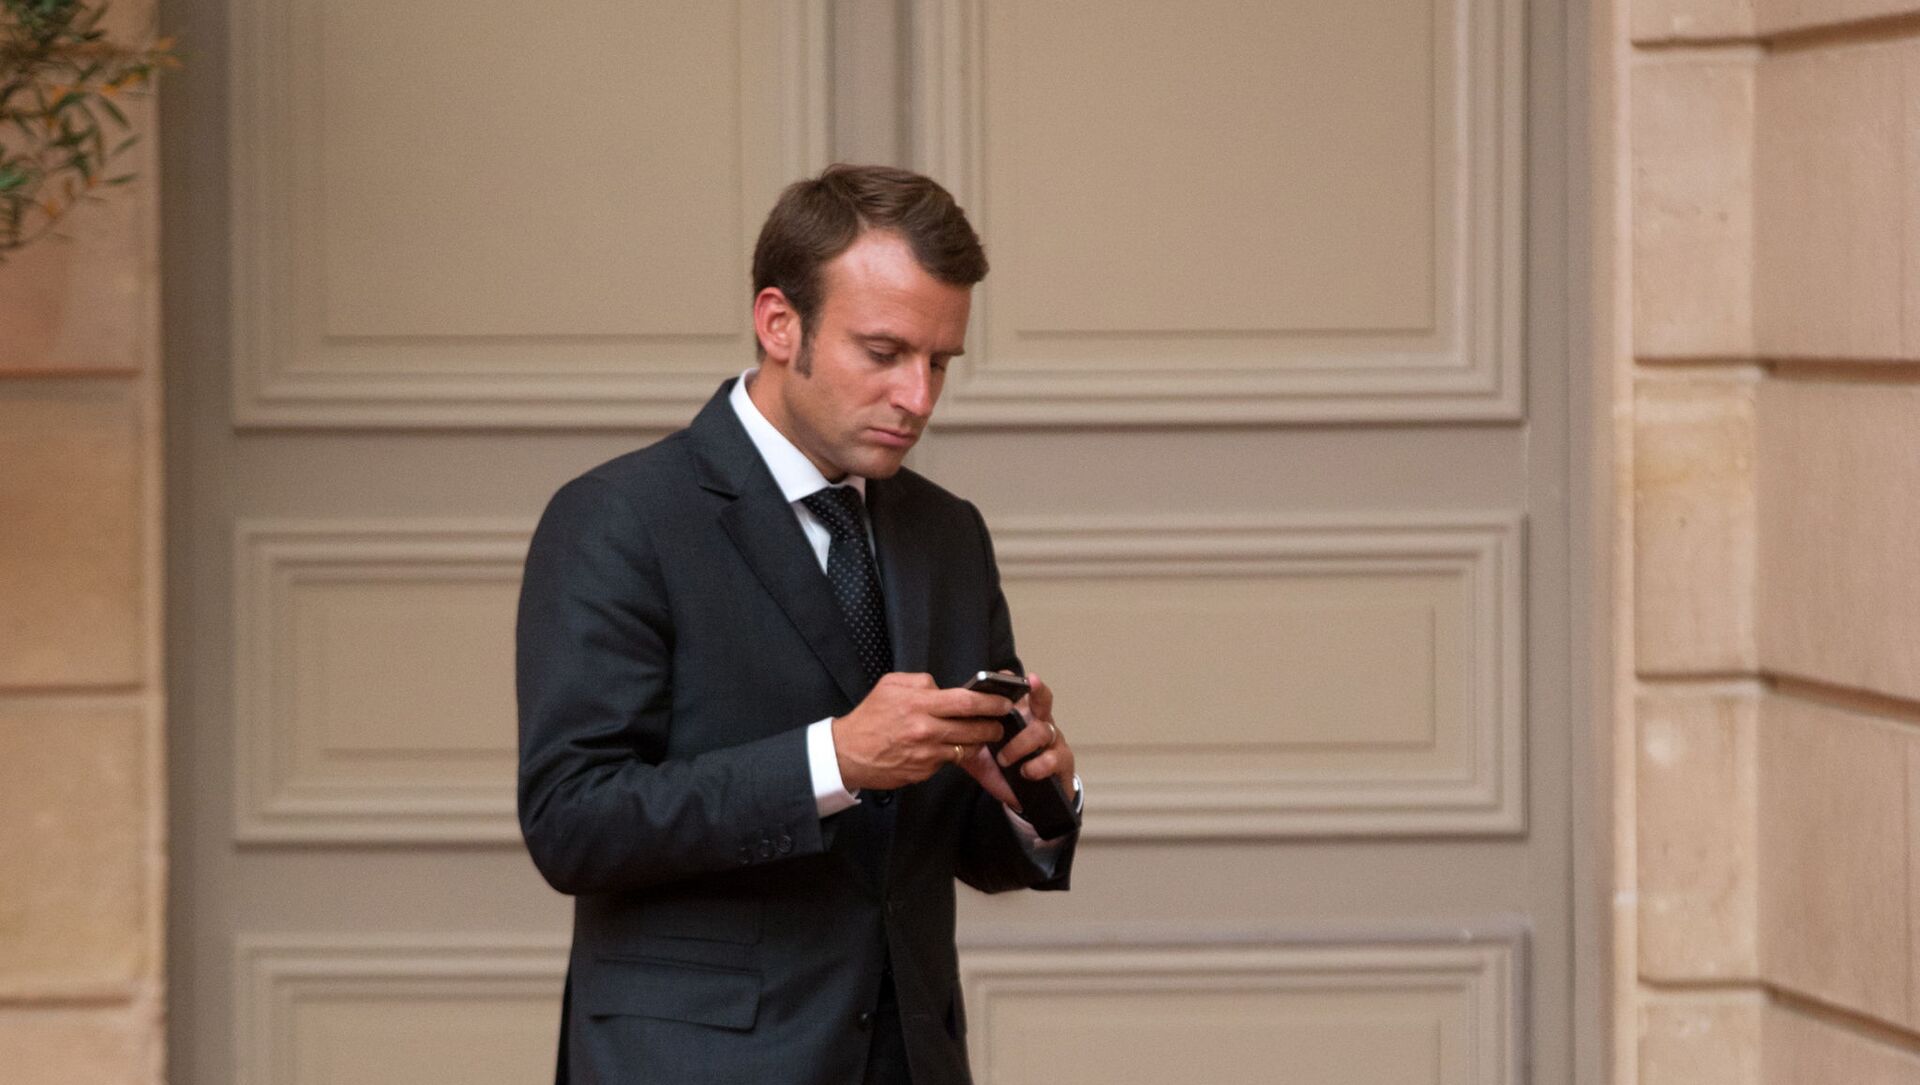 Emmanuel Macron, looks at his phone. - Sputnik International, 1920, 20.07.2021